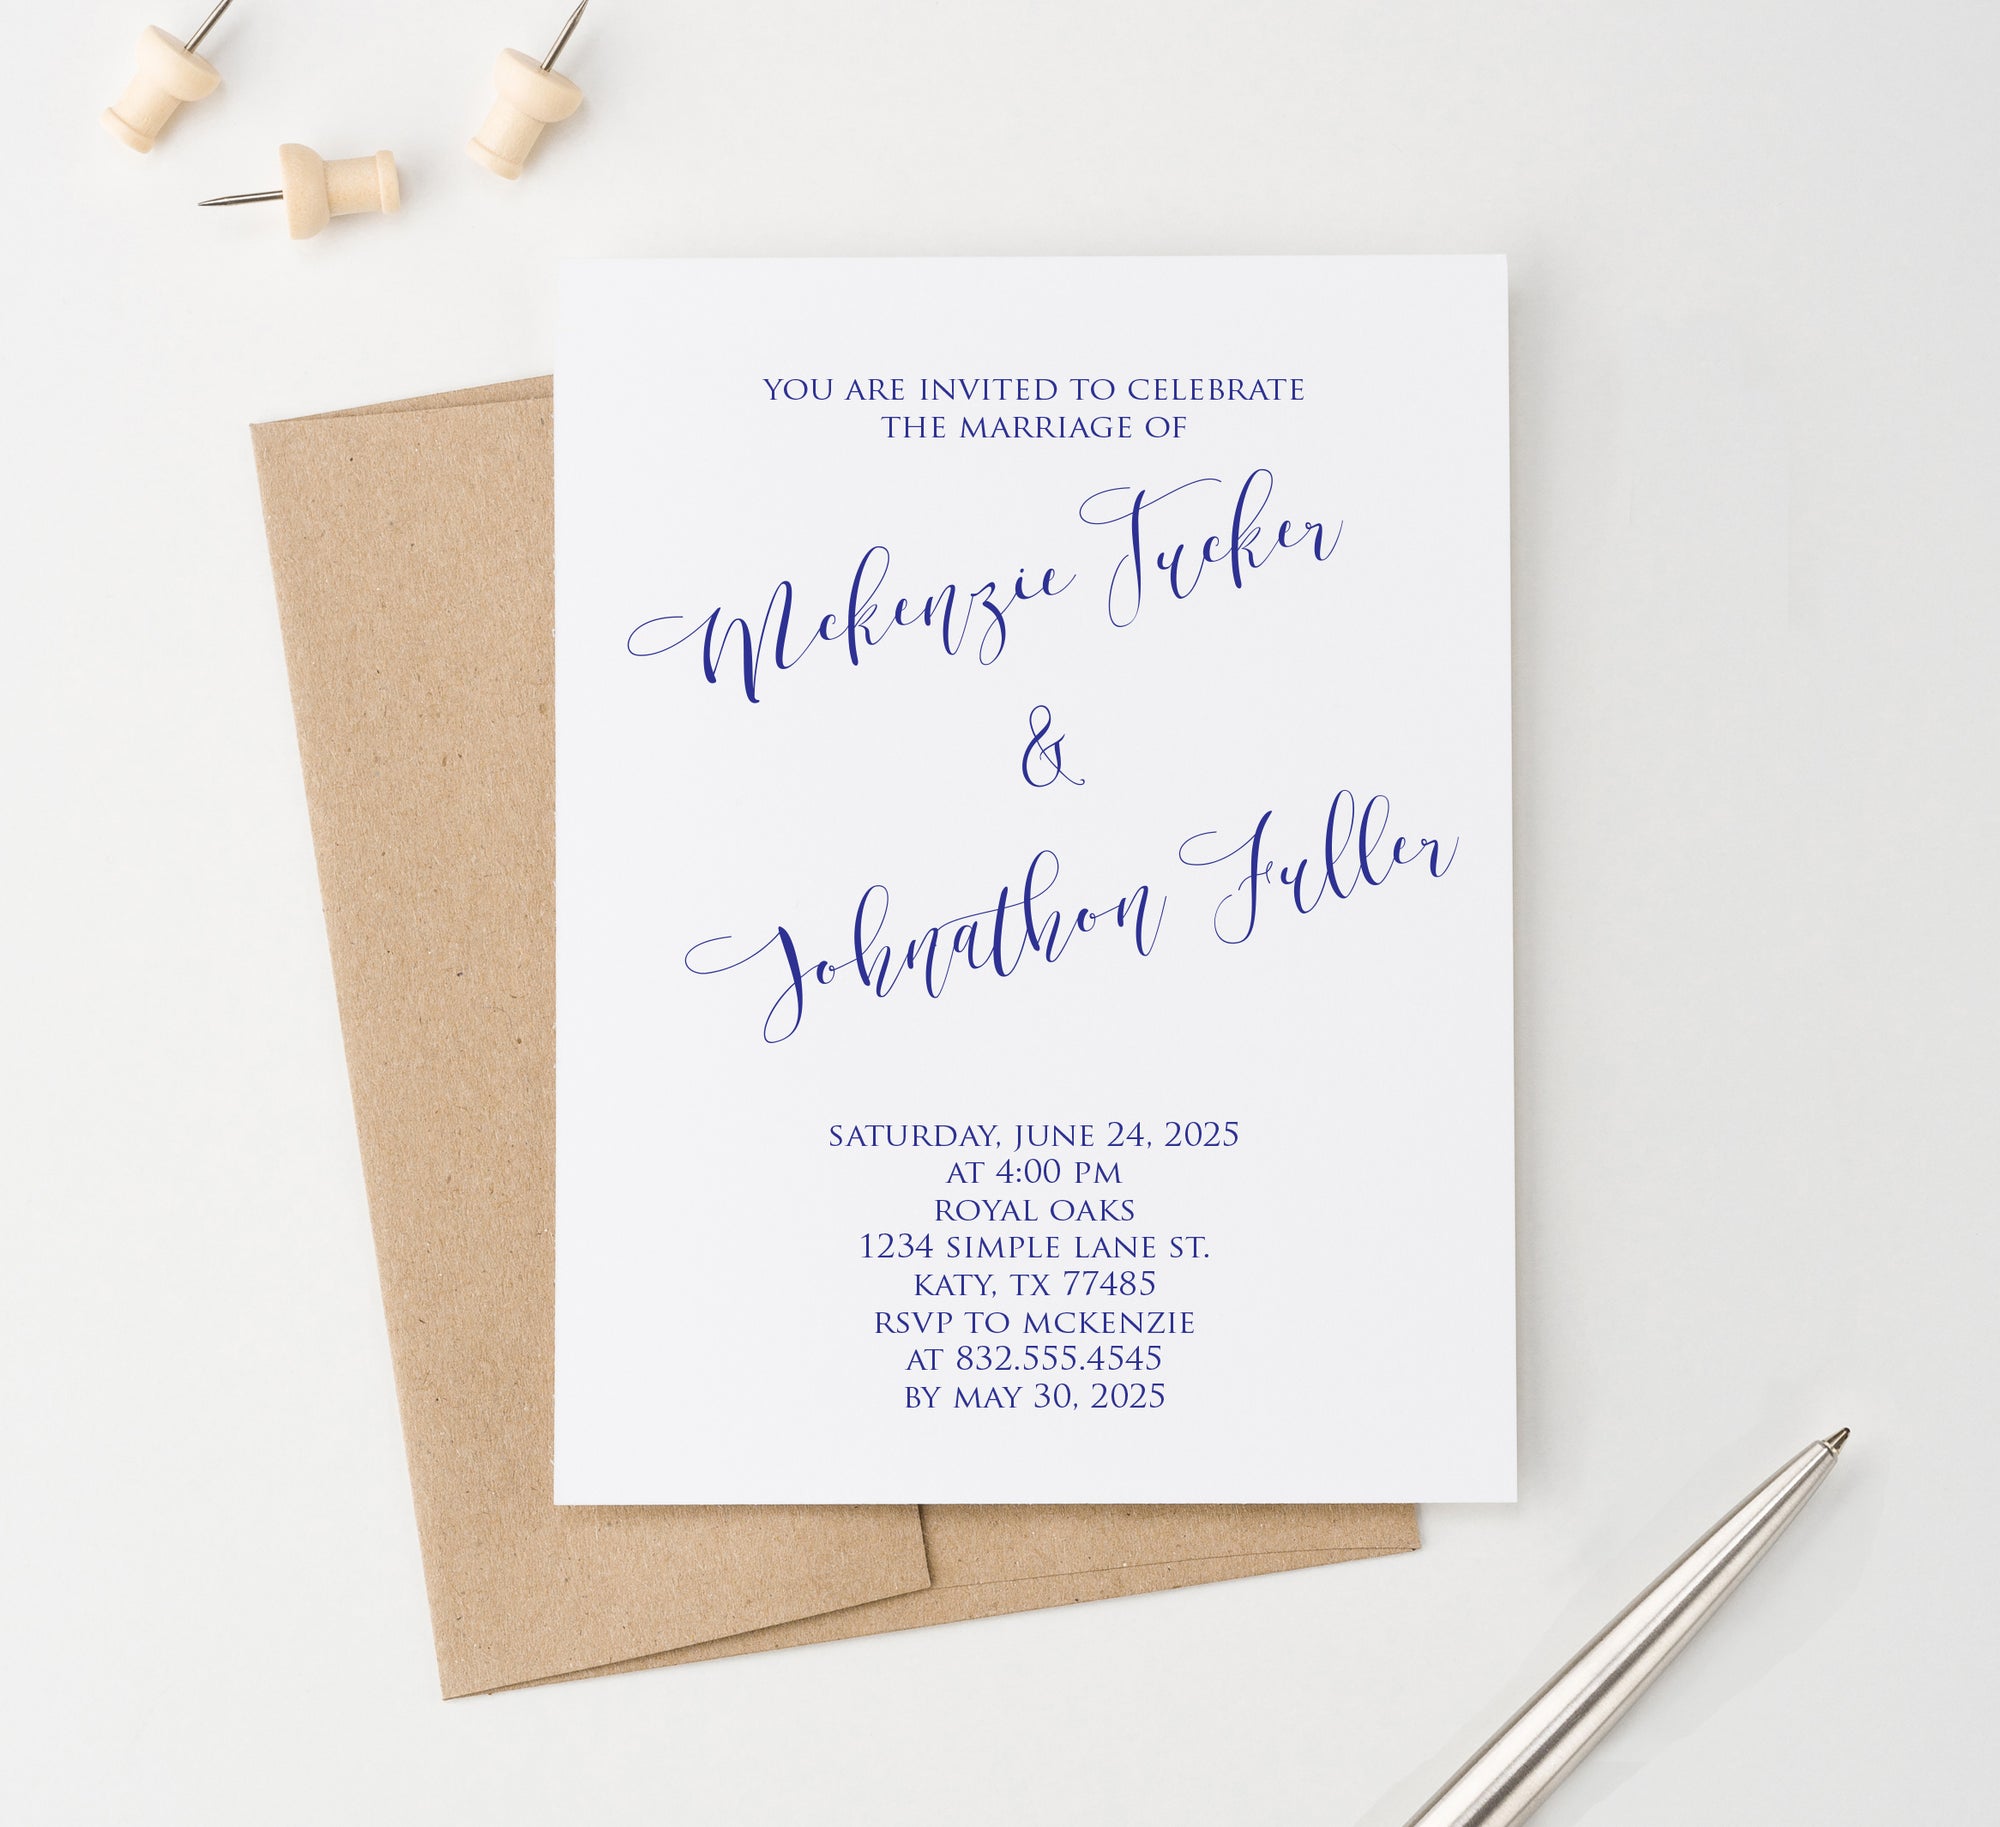 WI032 Calligraphy wedding invitations personalized simple classic classy elegant invites marriage